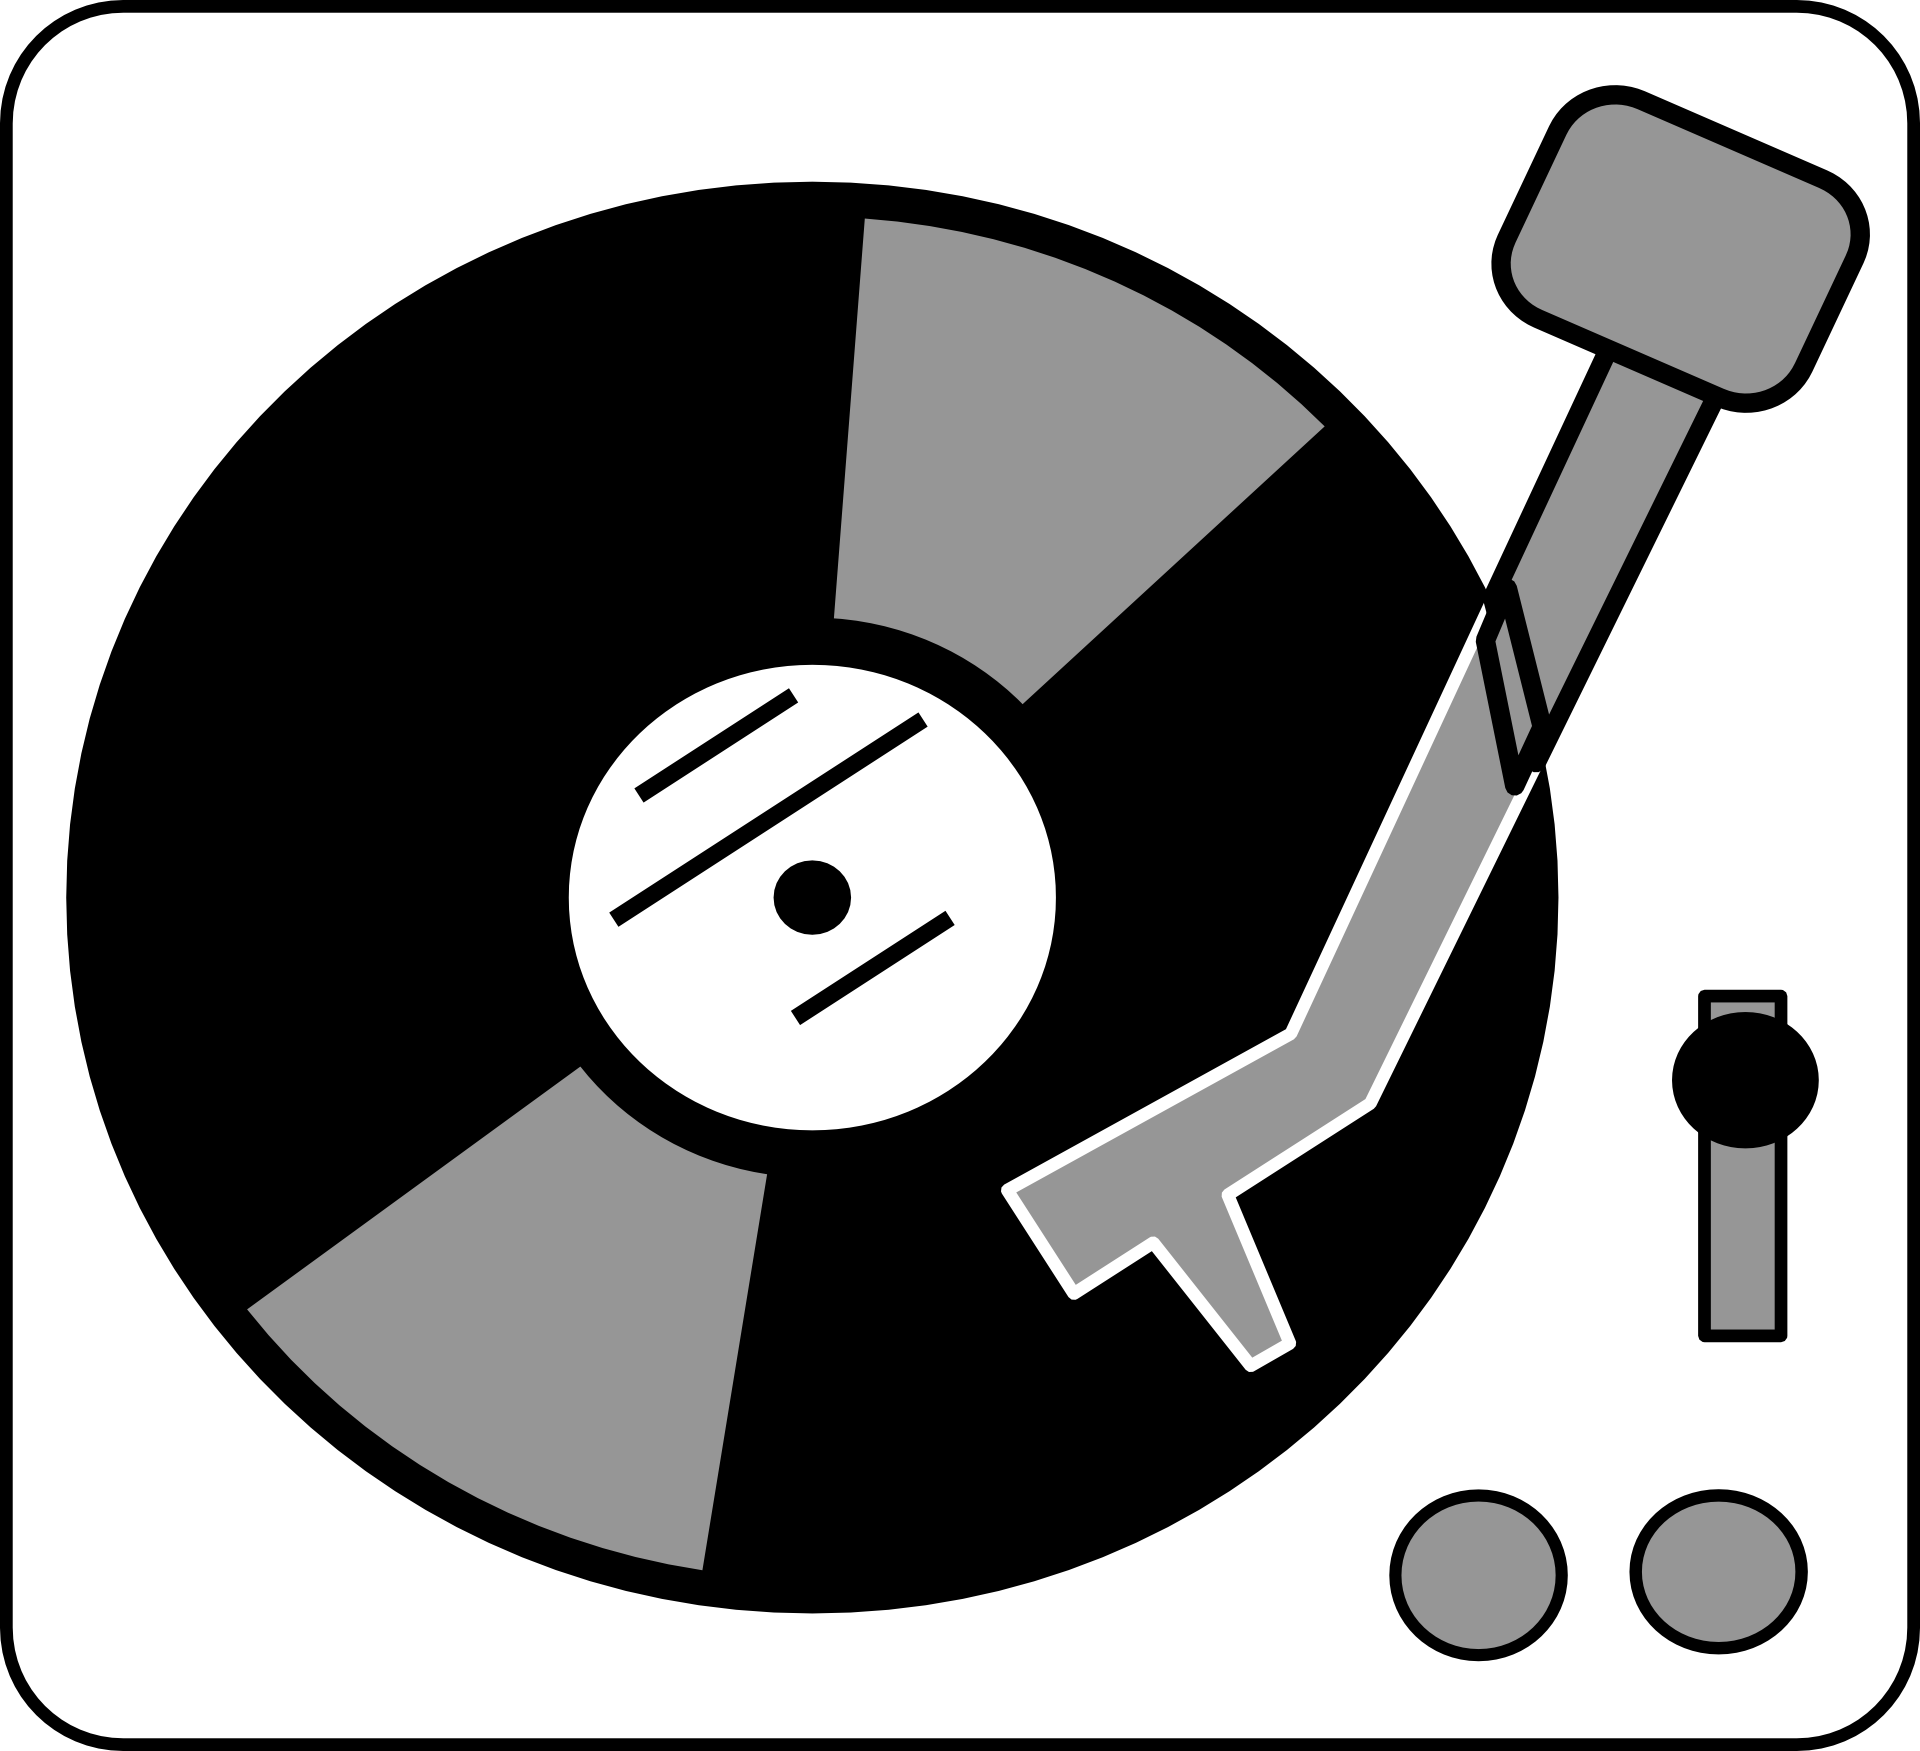 Vinyl player drawing free image download